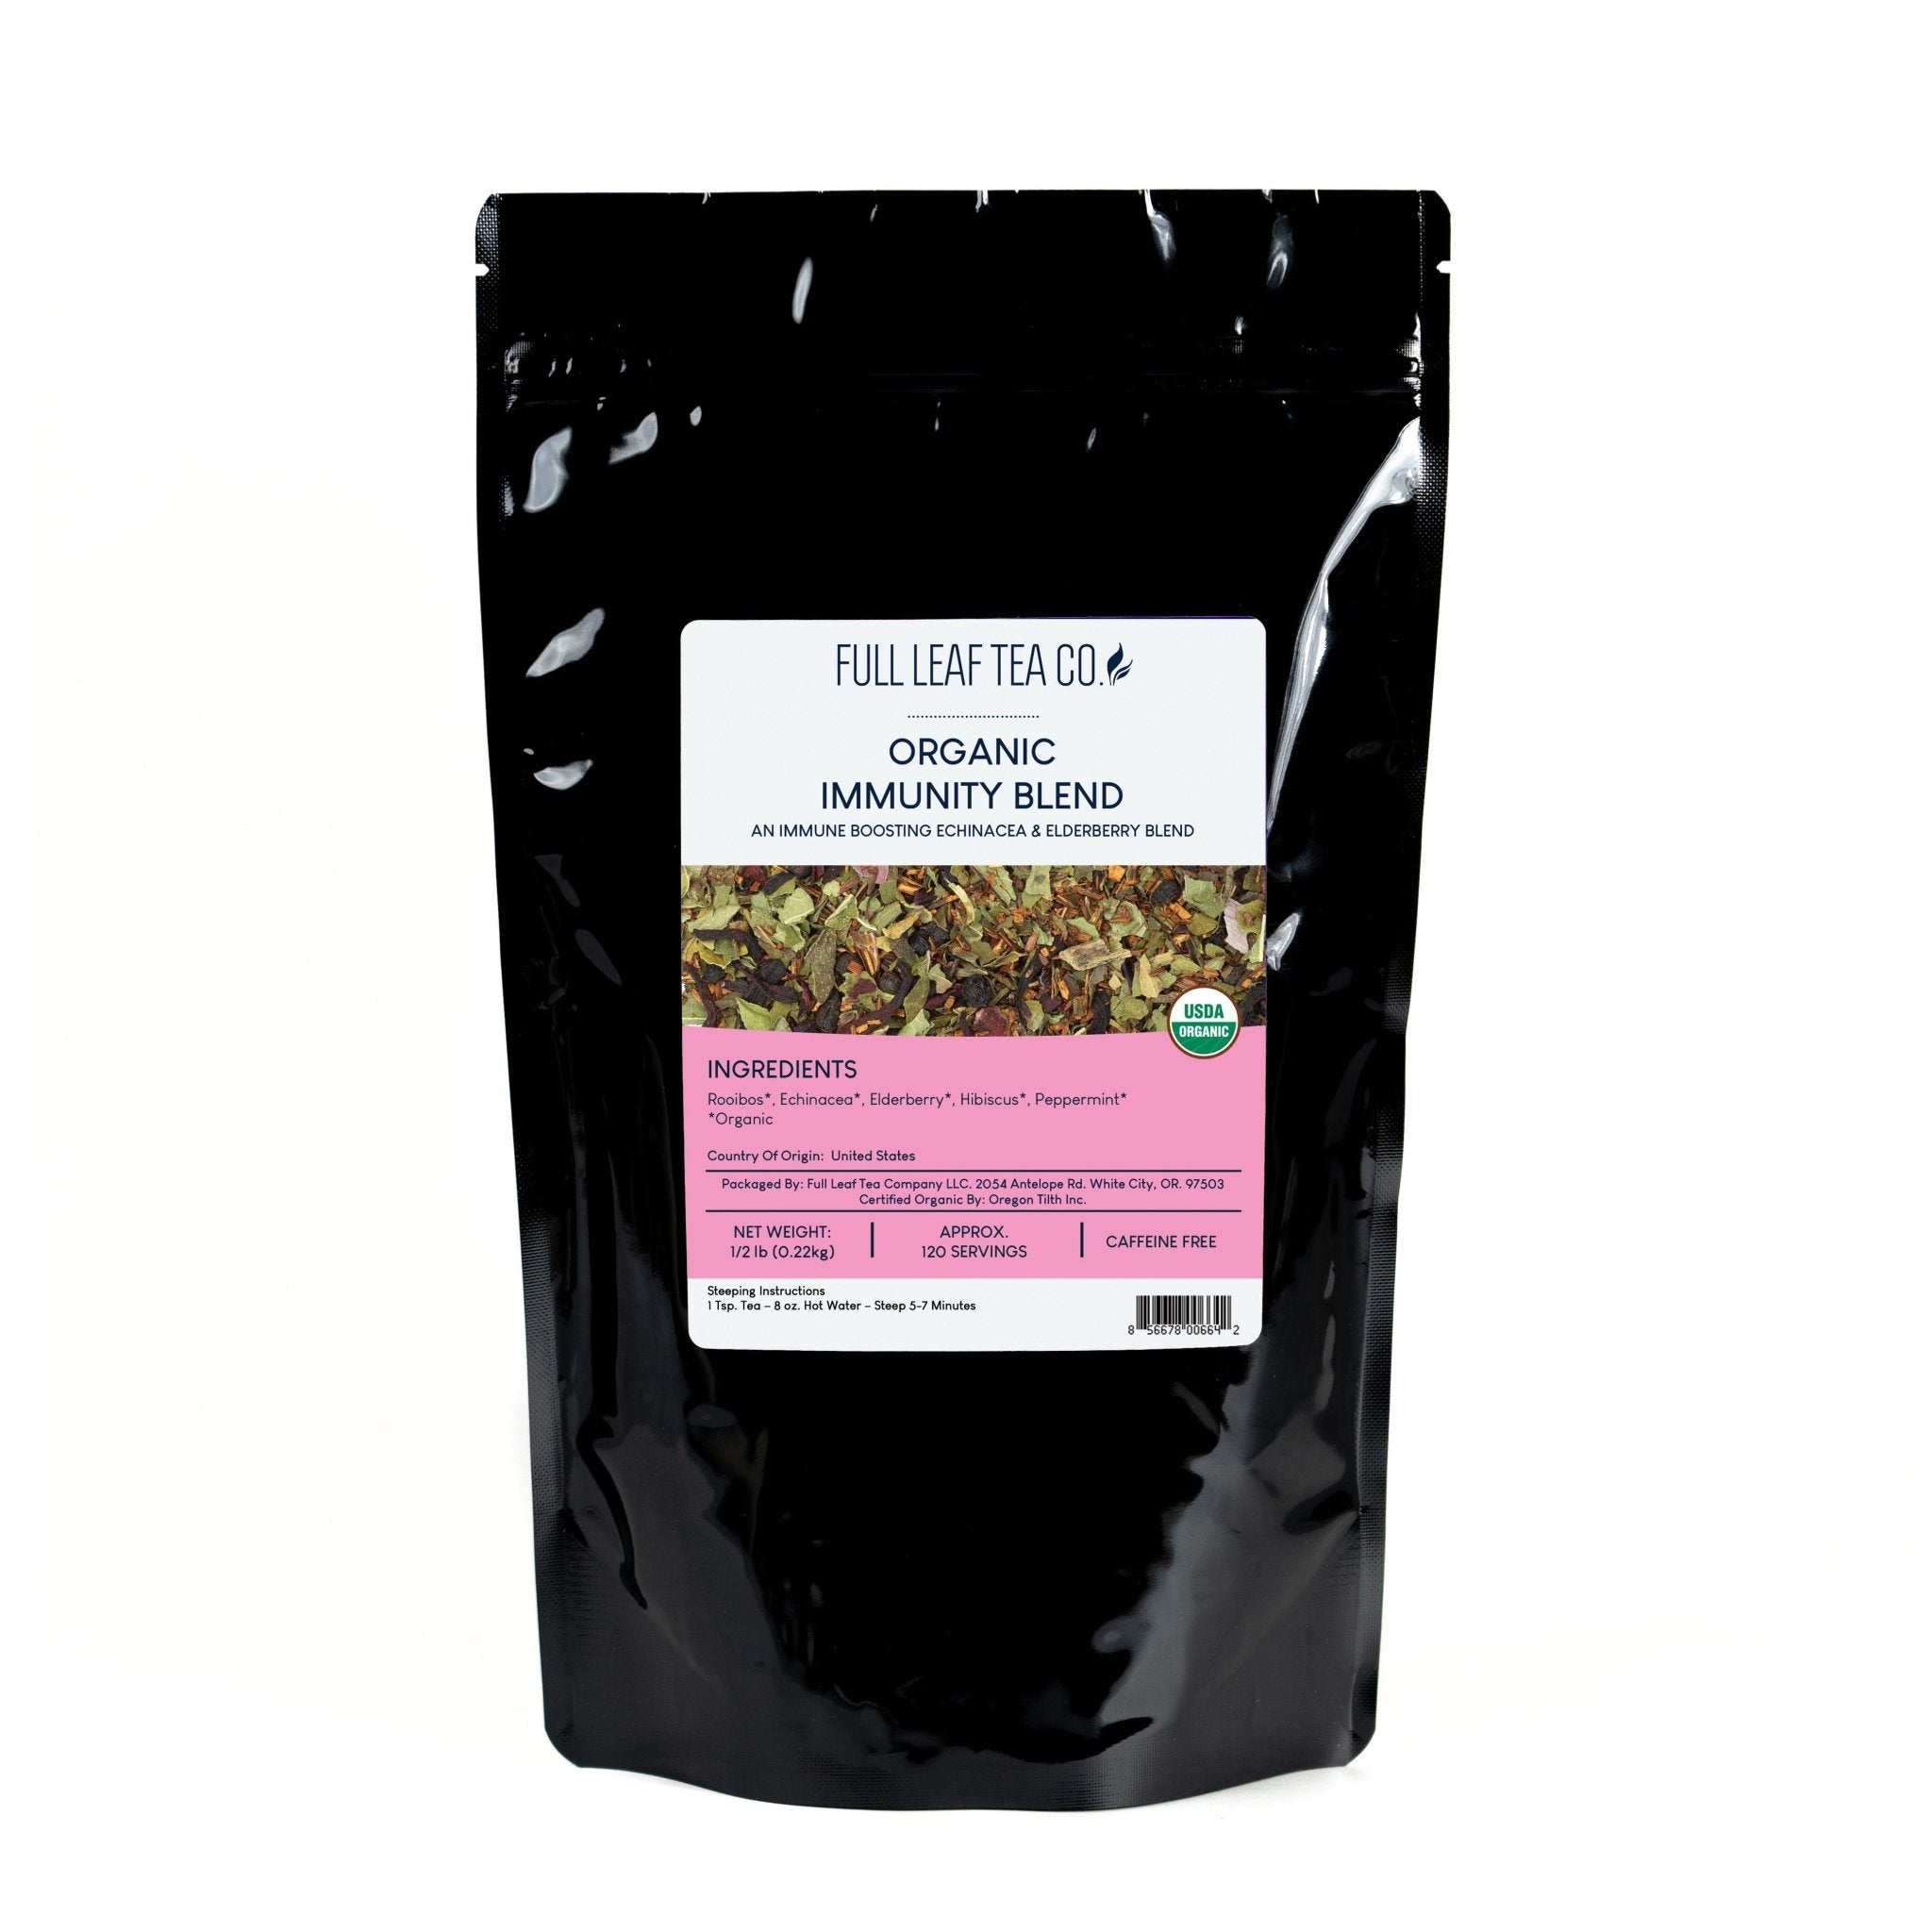 Organic Immunity Blend - Loose Leaf Tea - Full Leaf Tea Company